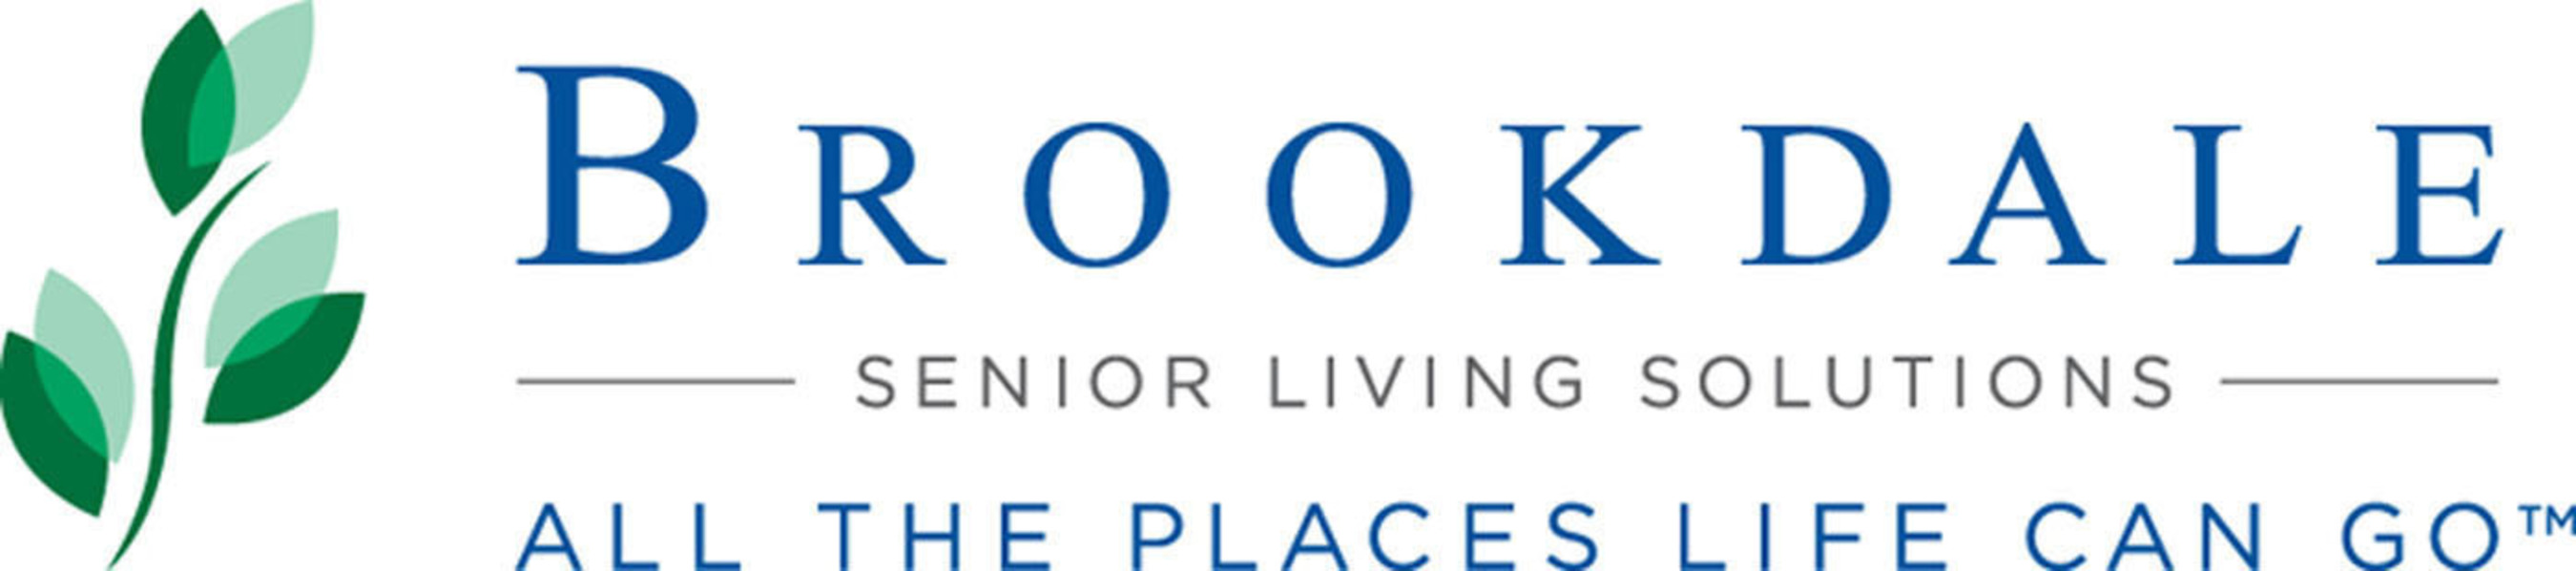 Brookdale Senior Living Inc. Logo.